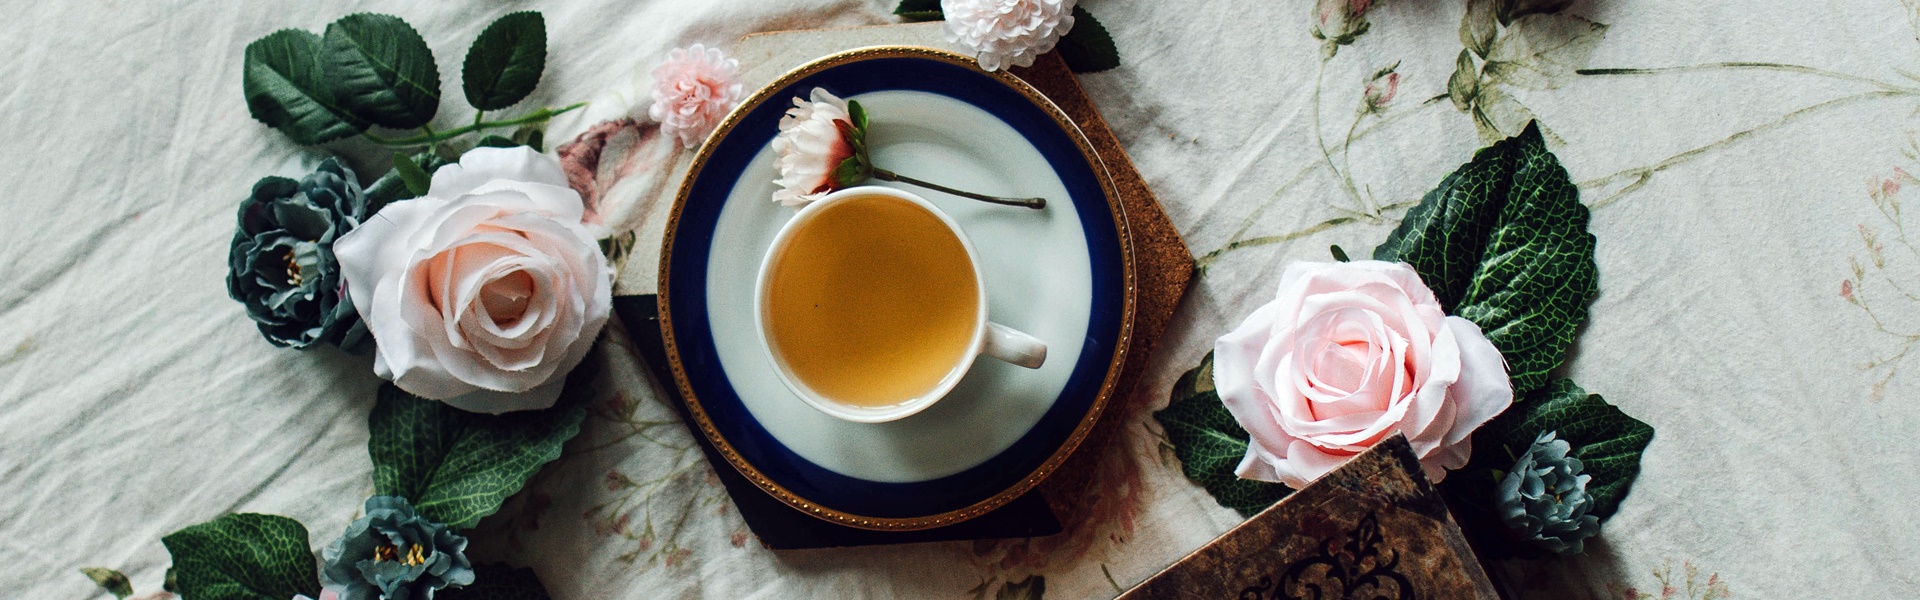 Tea & roses